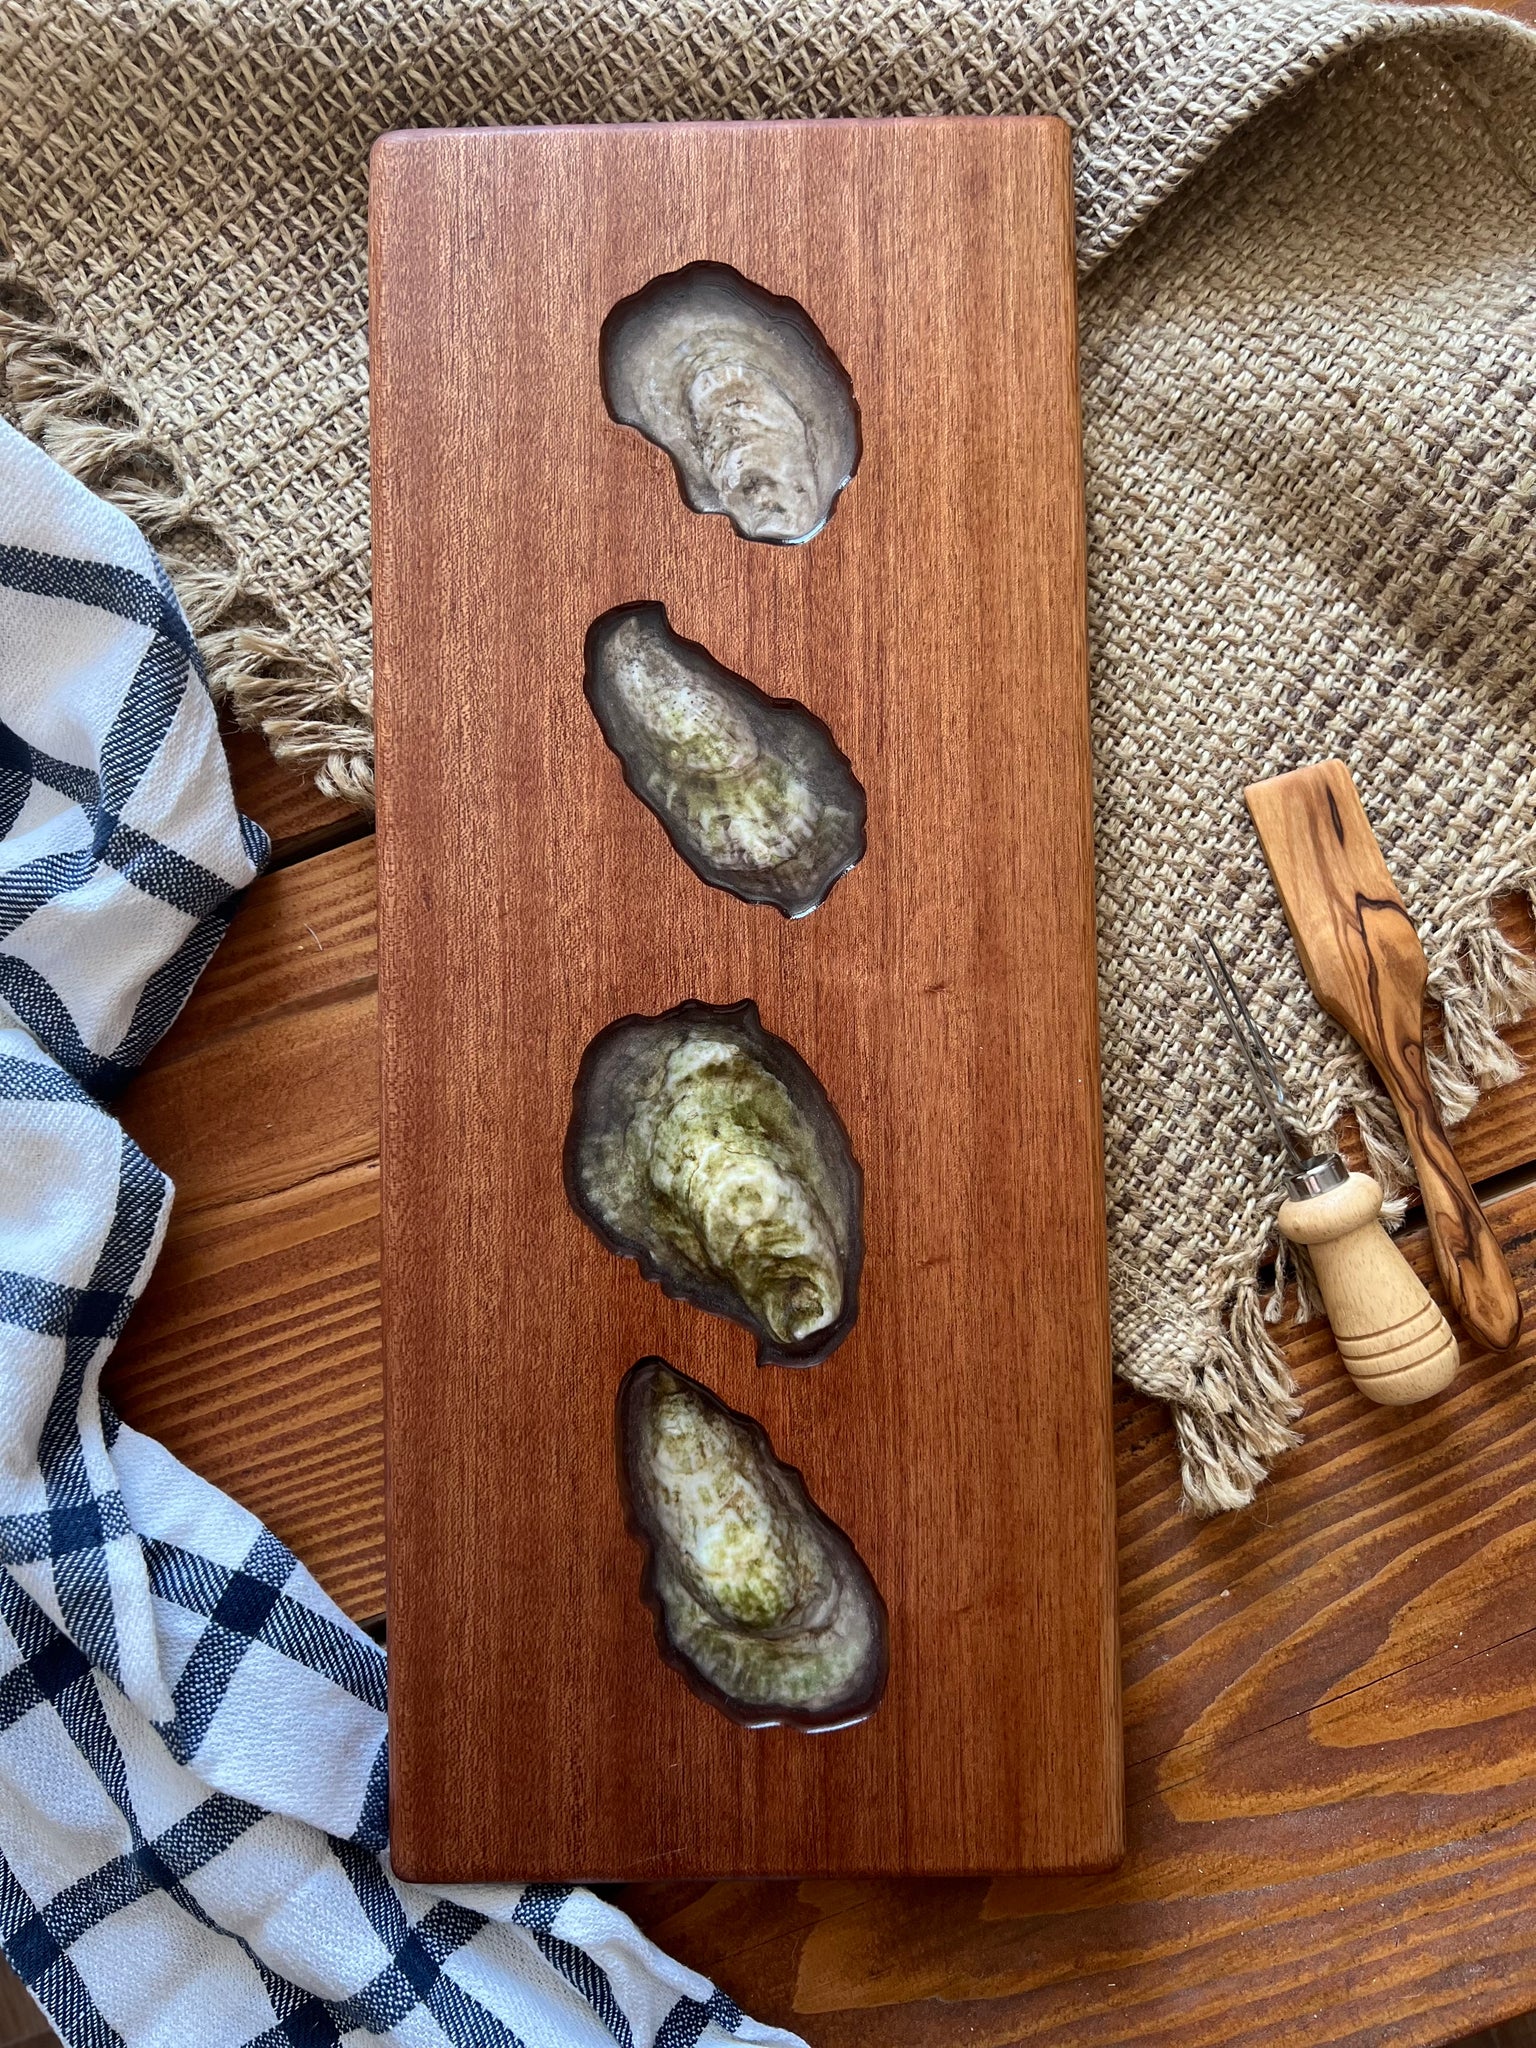 Mahogany and Oysters